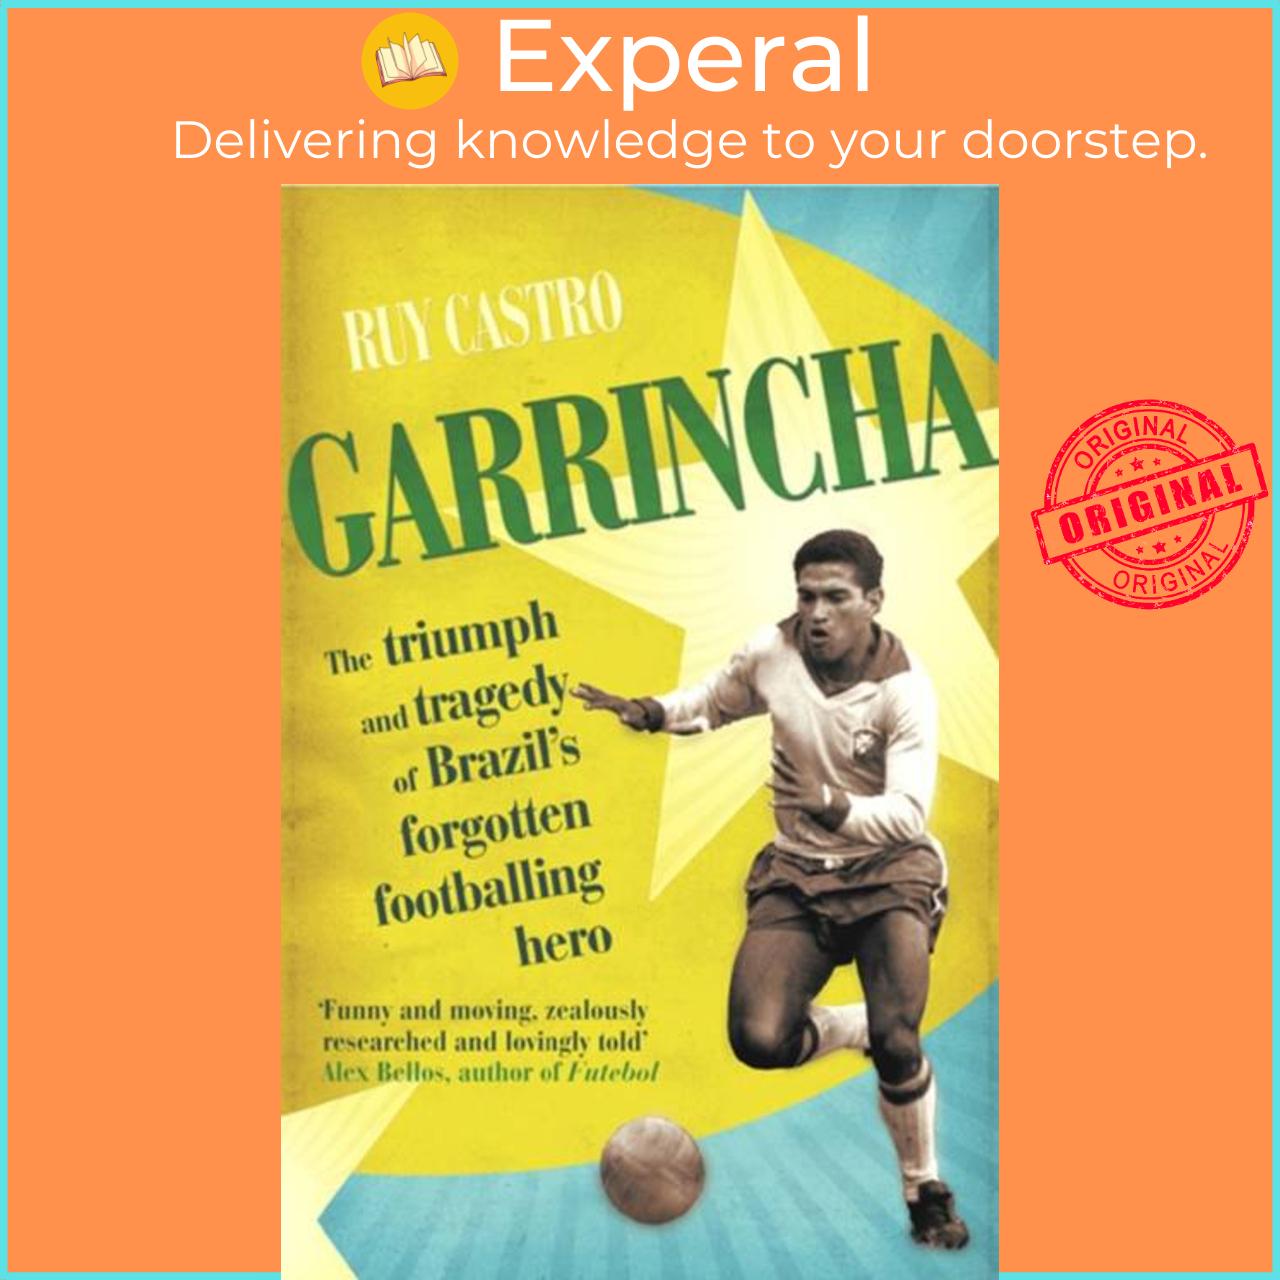 Hình ảnh Sách - Garrincha - The  and Tragedy of Brazil's Forgotten Footballing Hero by Ruy Castro (UK edition, paperback)